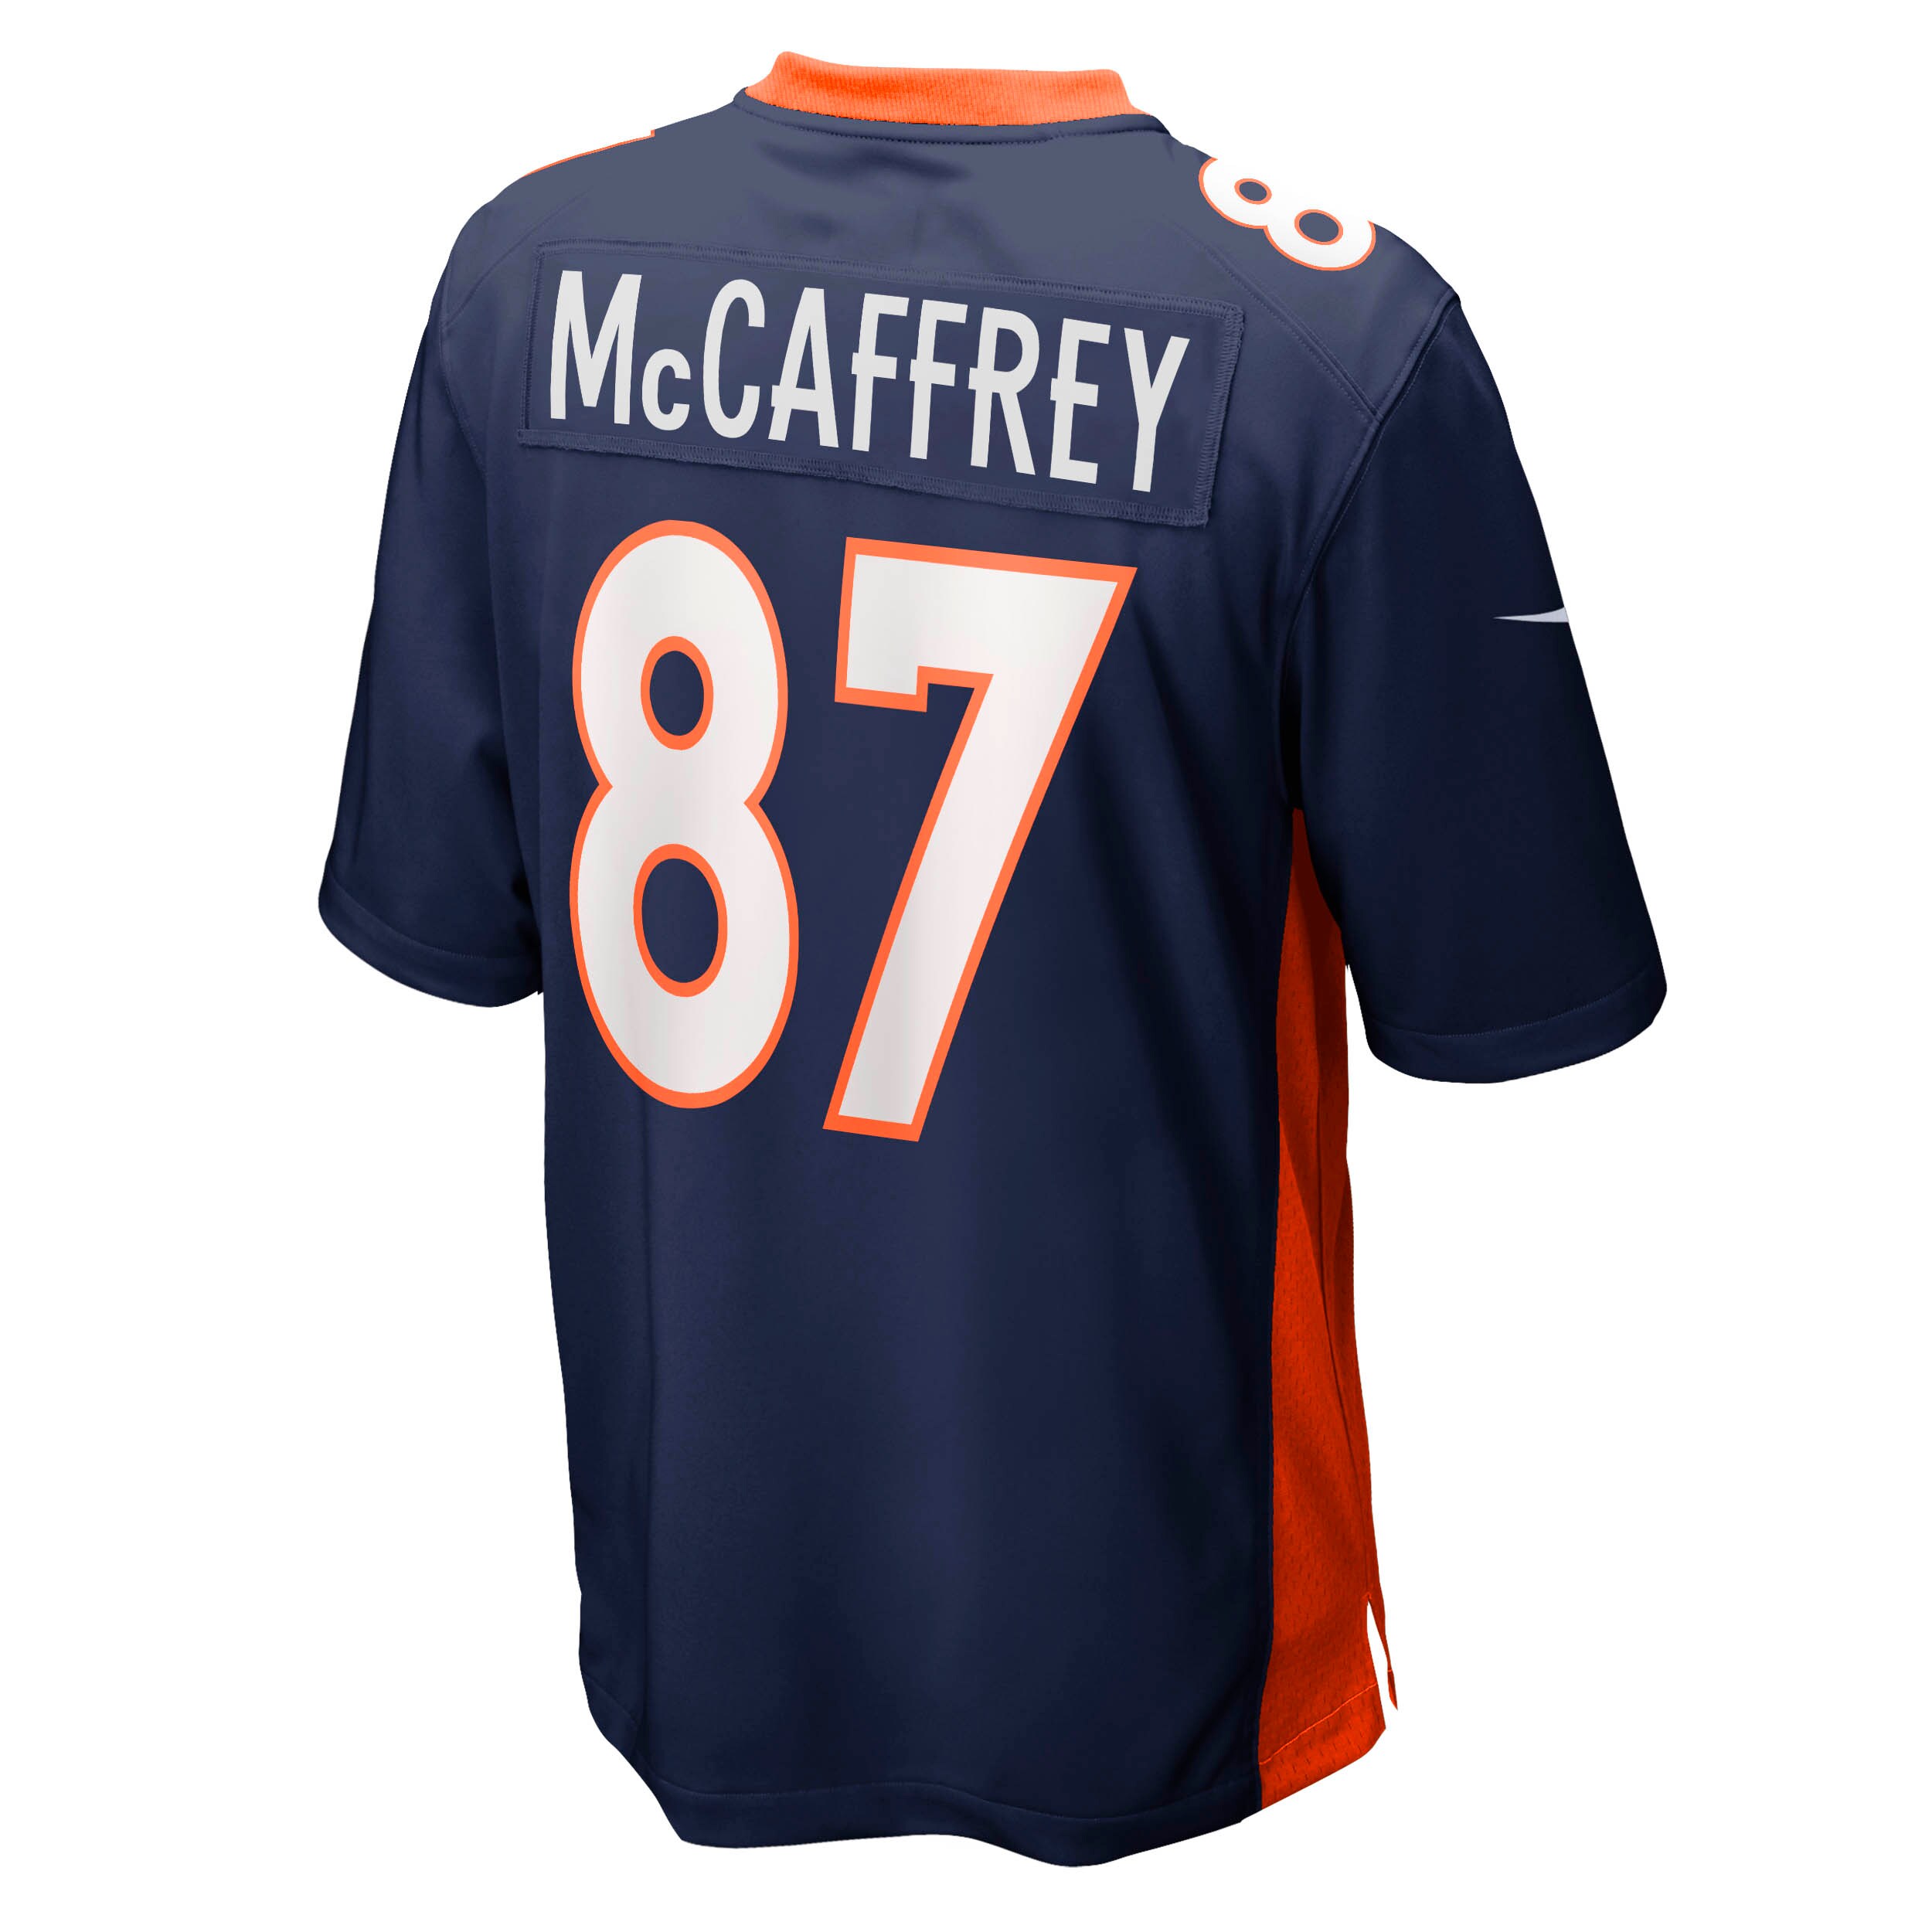 Men's Denver Broncos Ed McCaffrey Nike Navy Retired Player Jersey